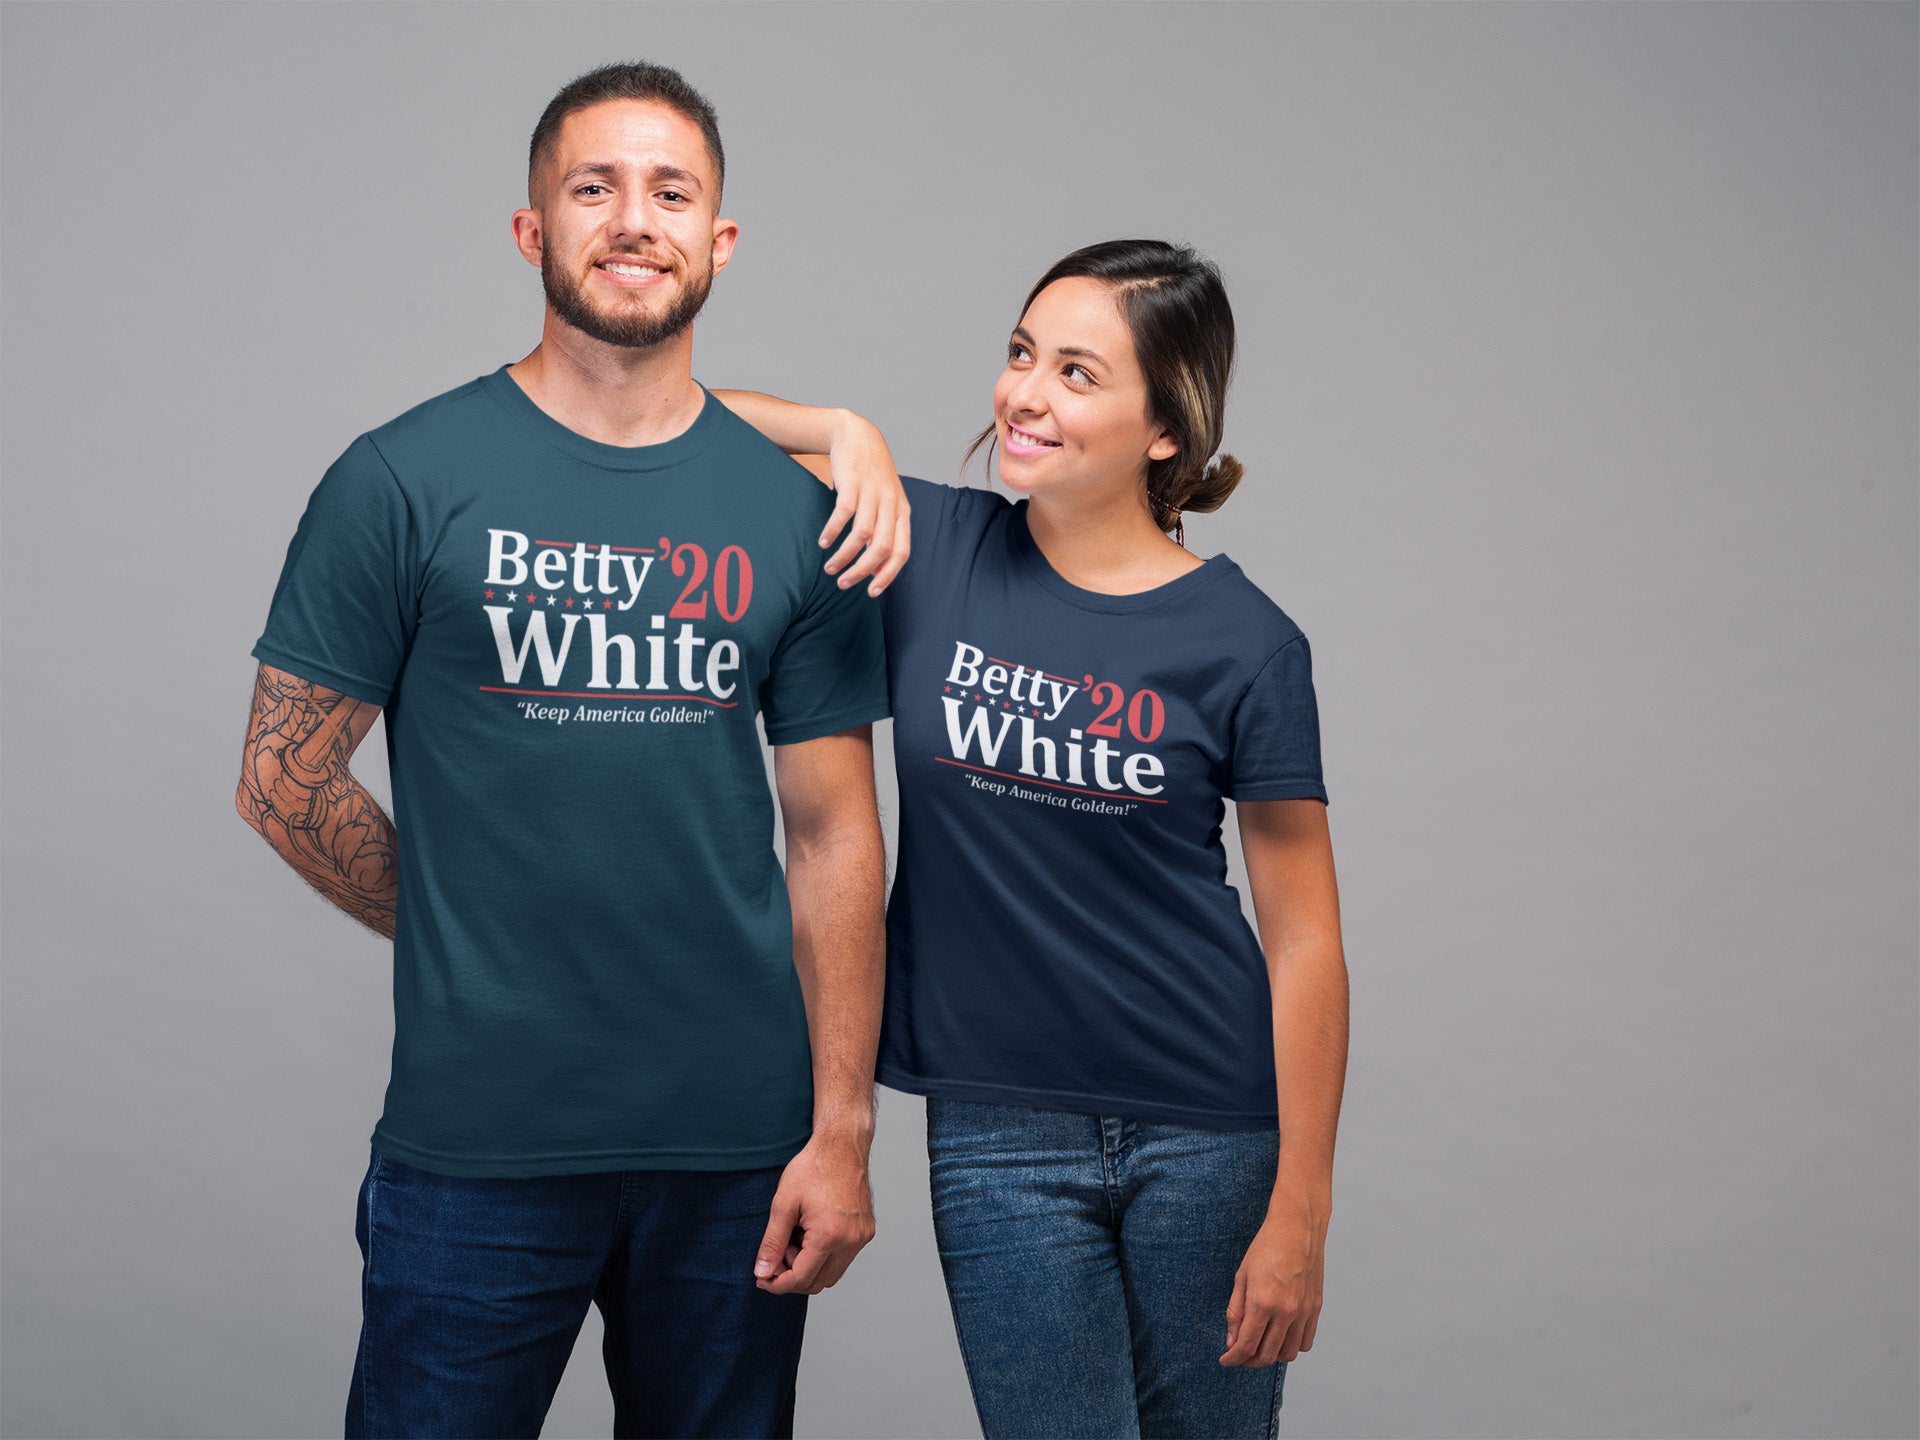 Betty White 2020 Election